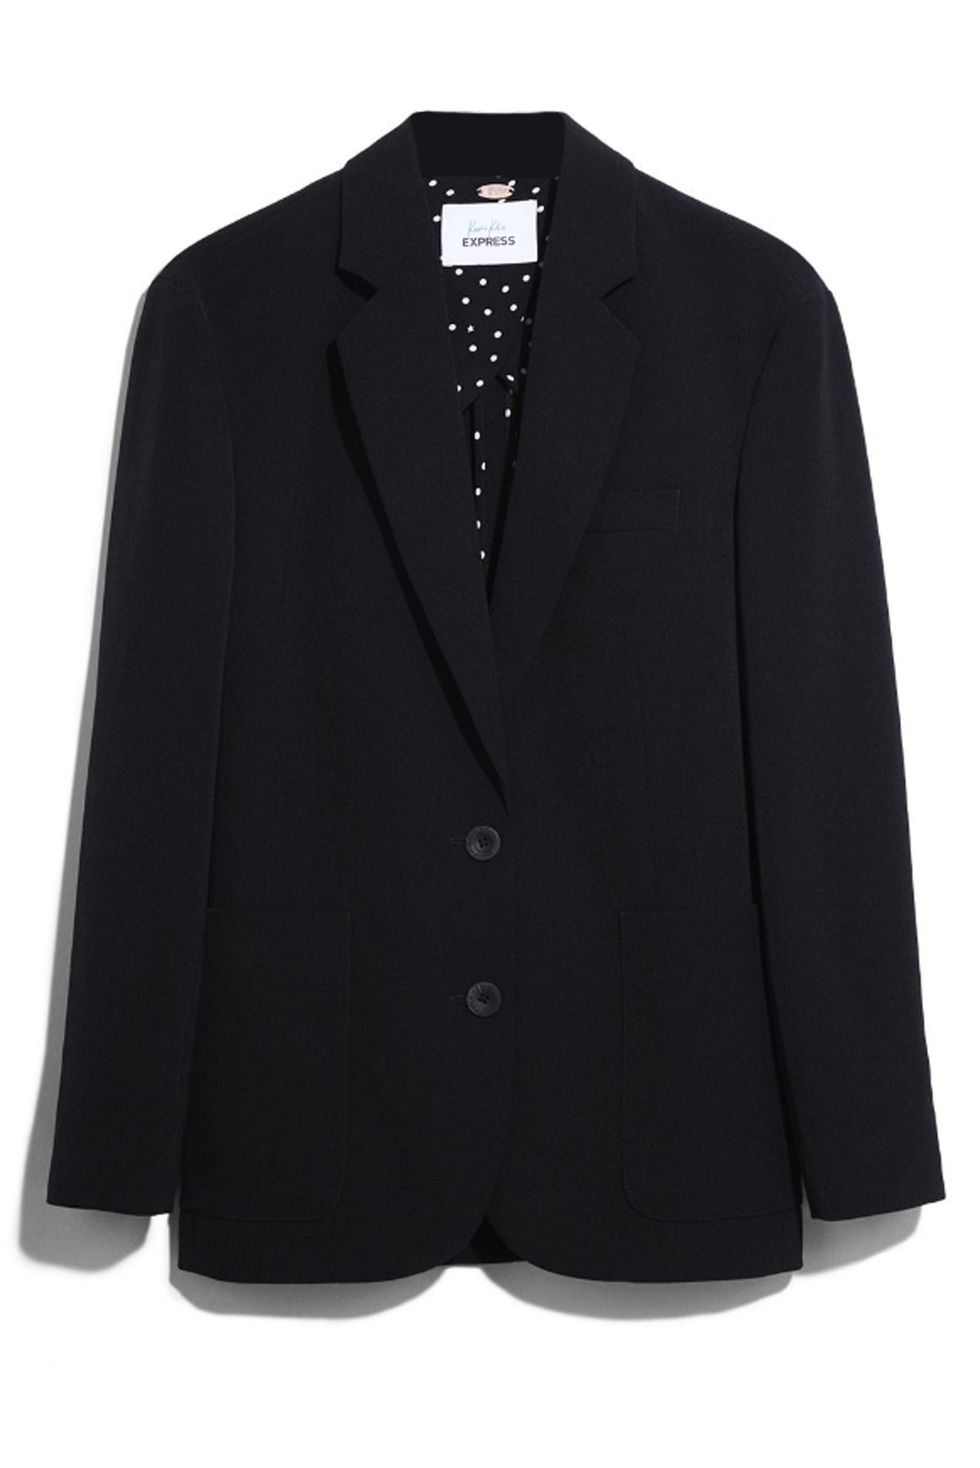 Clothing, Outerwear, Black, Blazer, Jacket, Suit, Sleeve, Formal wear, Button, Collar, 